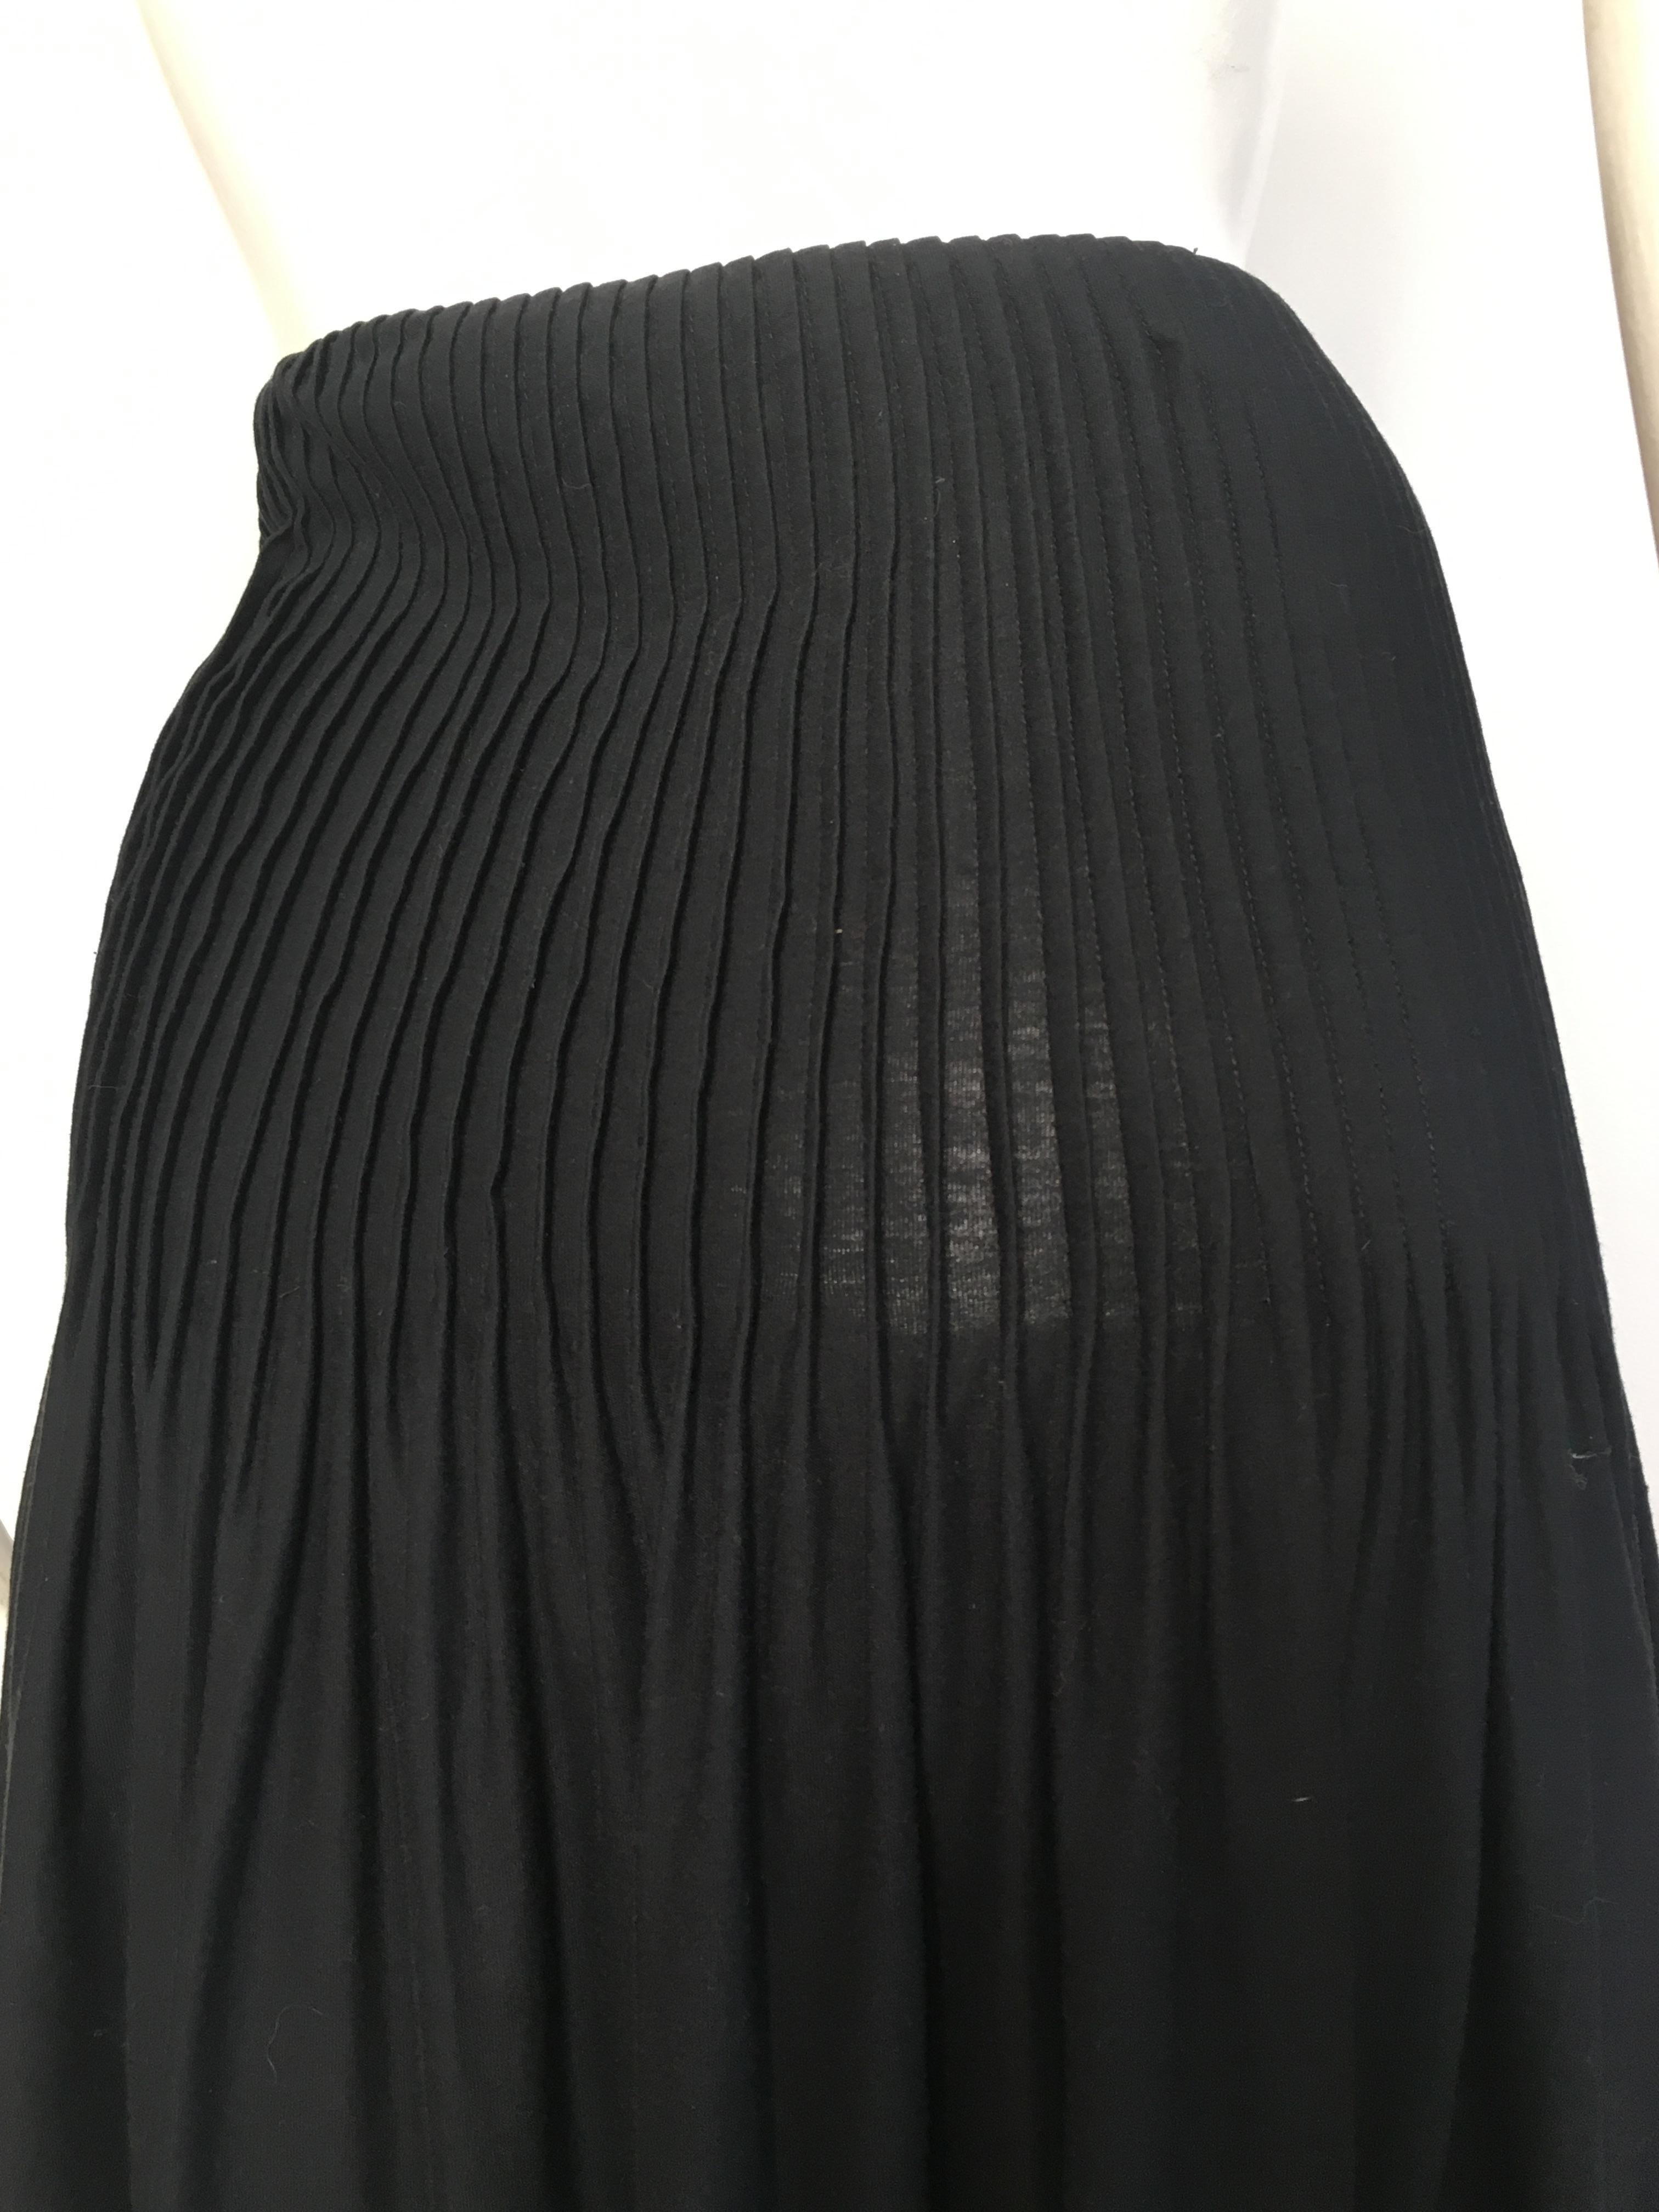 Emanuel Ungaro 1990s Silk & Cotton Pleated Black Skirt Size 10. For Sale 5